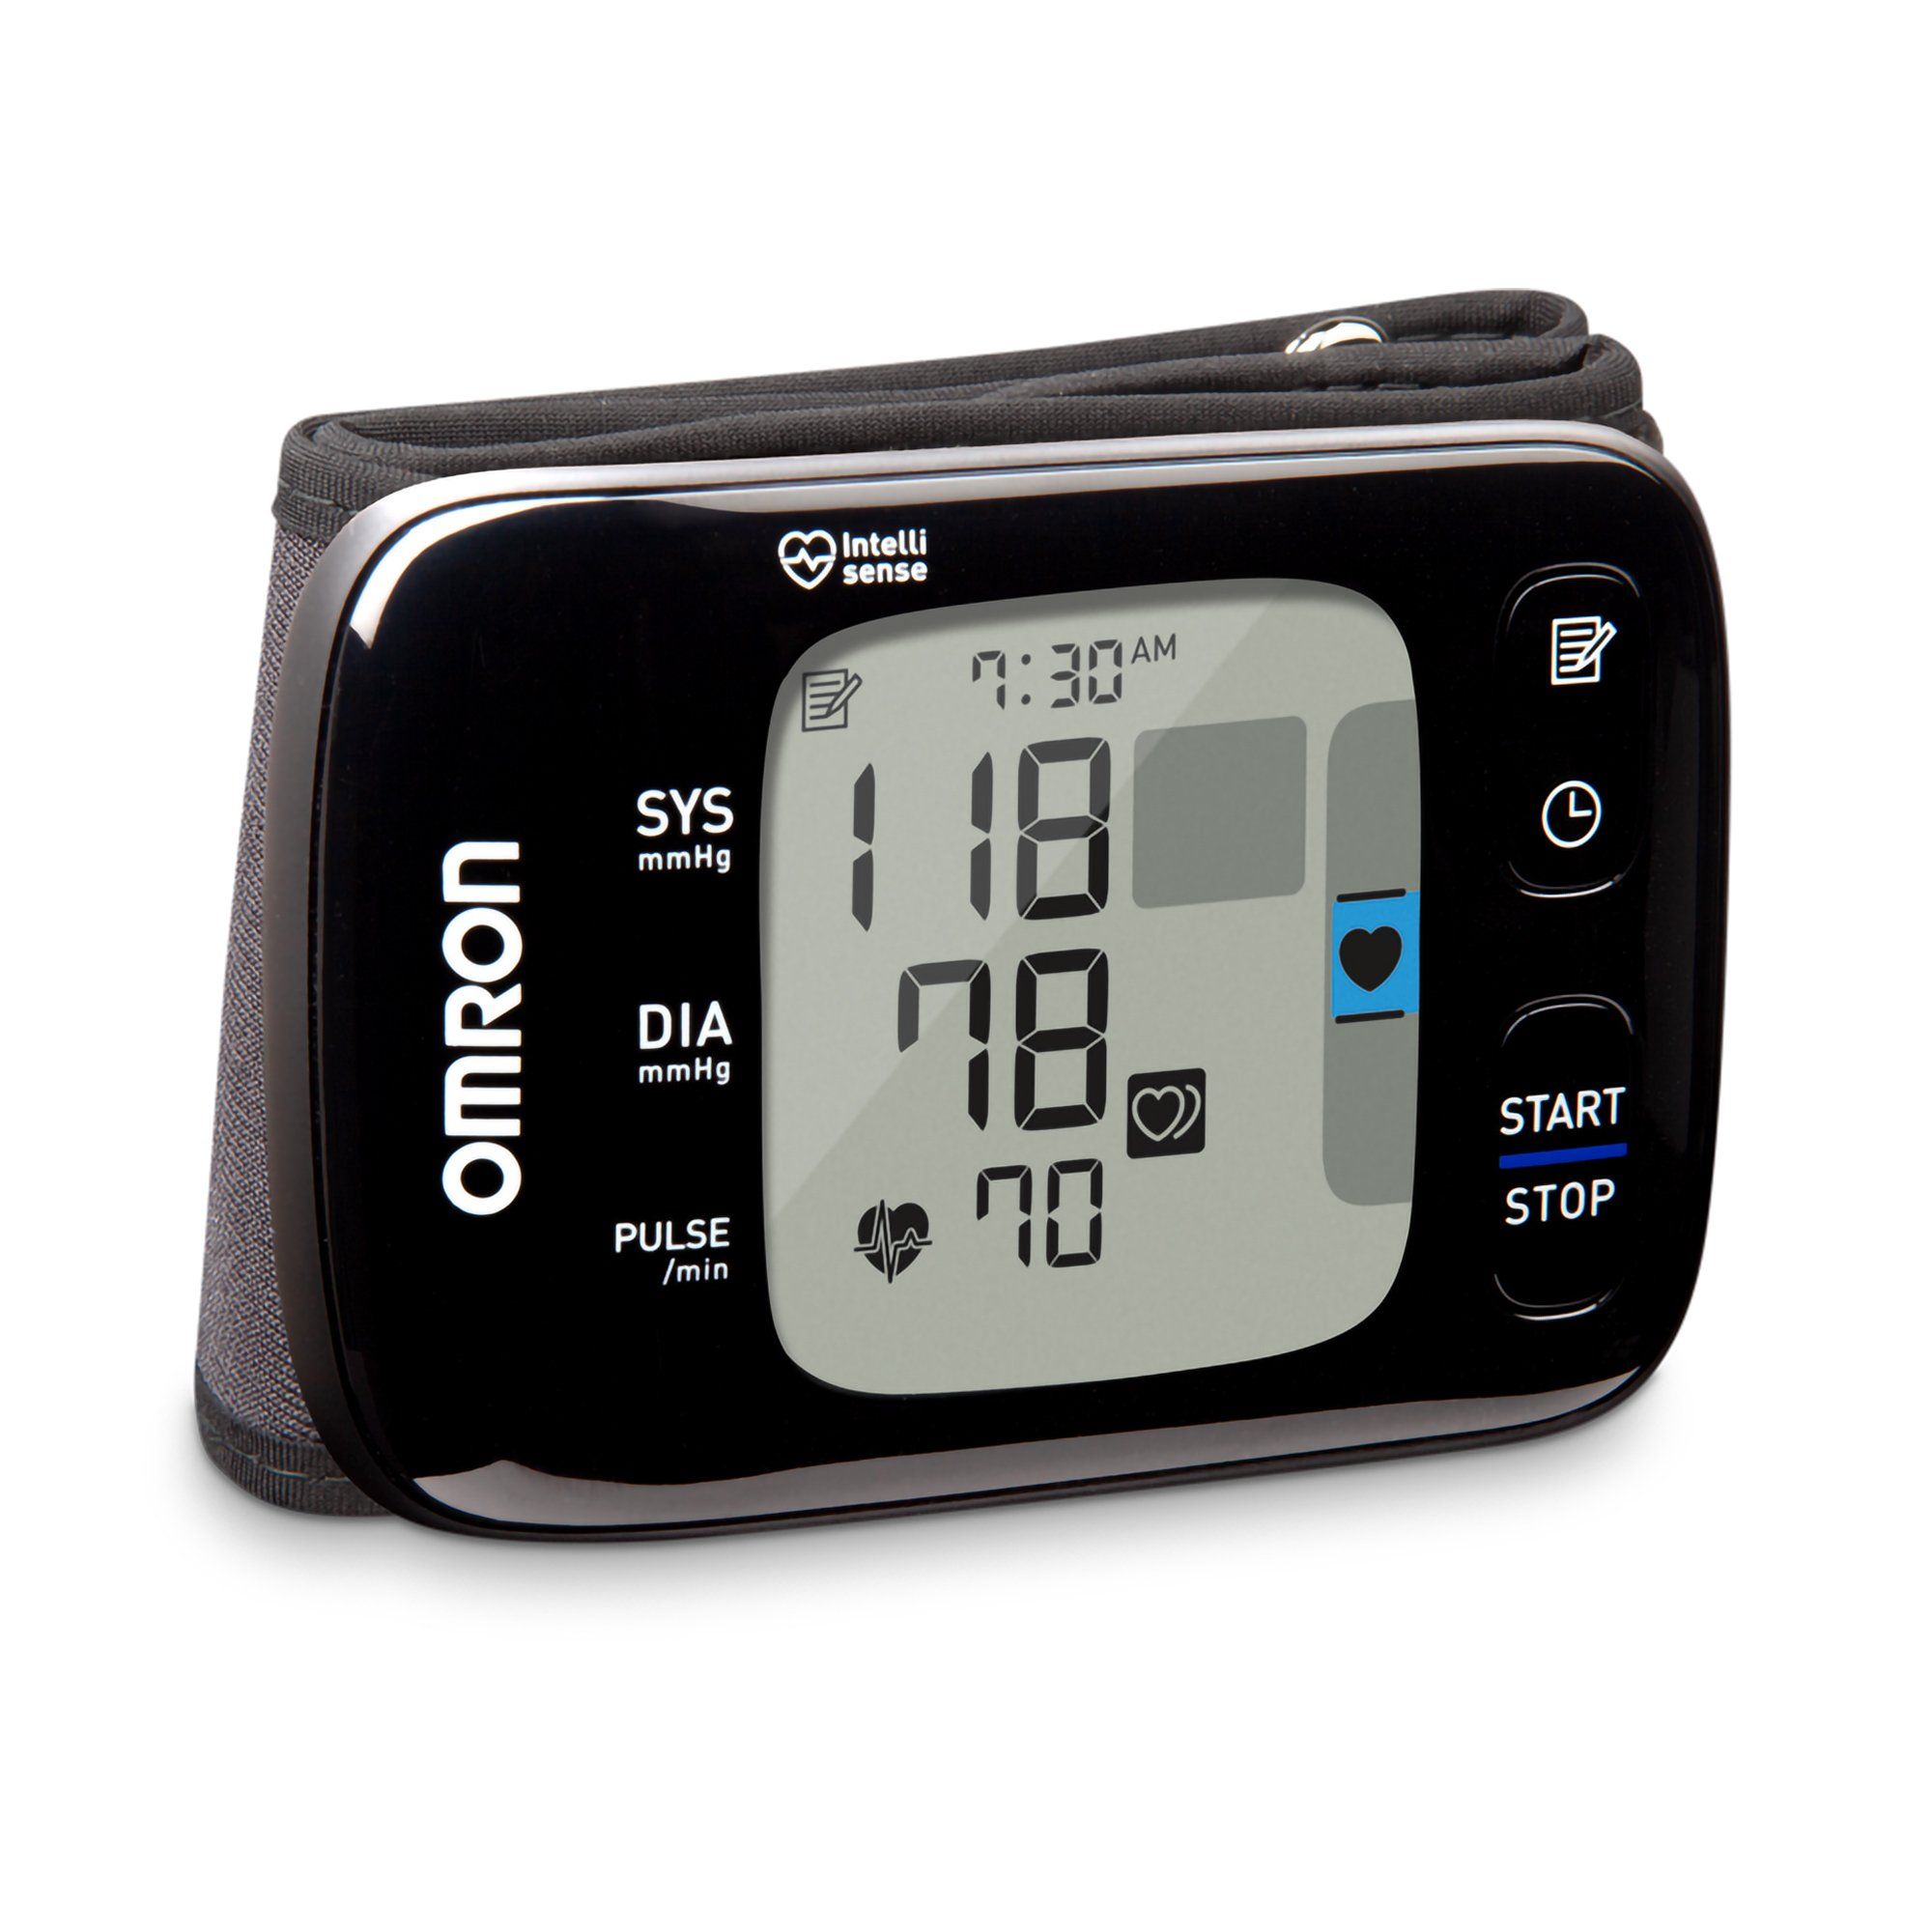 Omron 7 Series Automatic Digital Wrist Blood Pressure Monitor Cuff, Black - One Size Fits Most